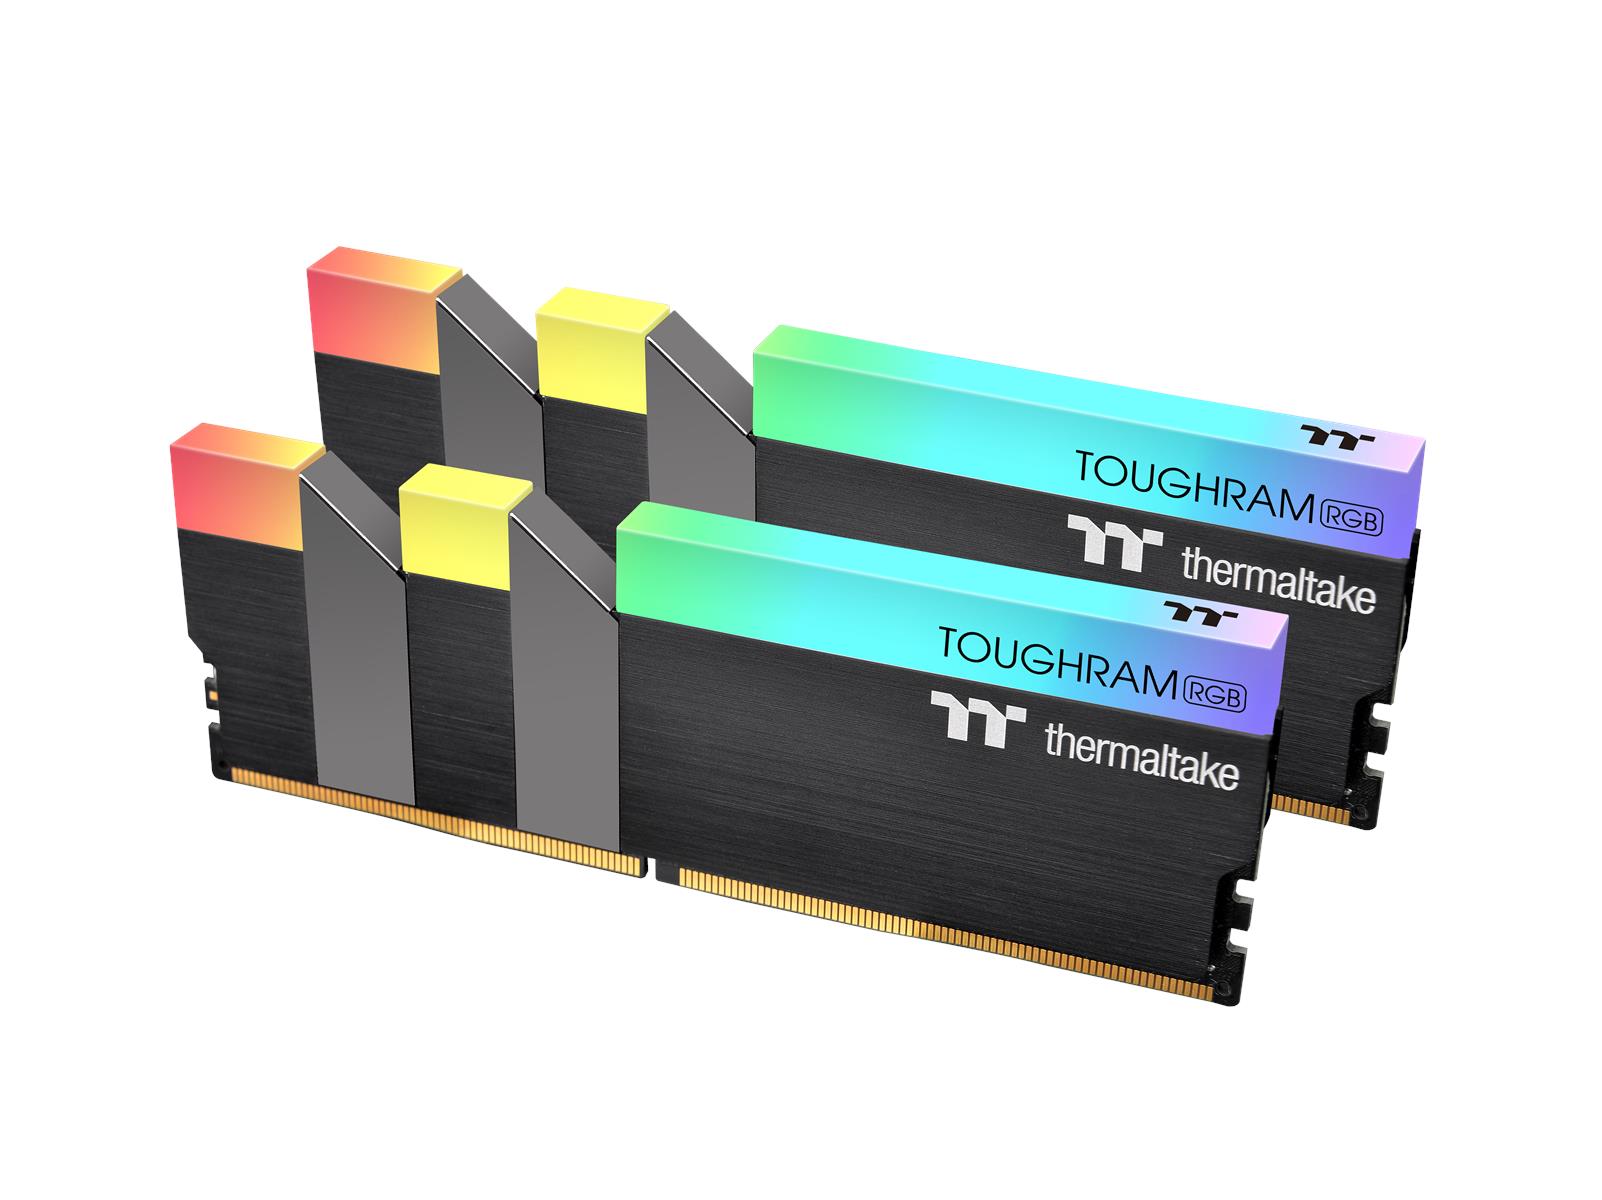 Thermaltake TOUGHRAM RGB DDR4 Memory Series 4